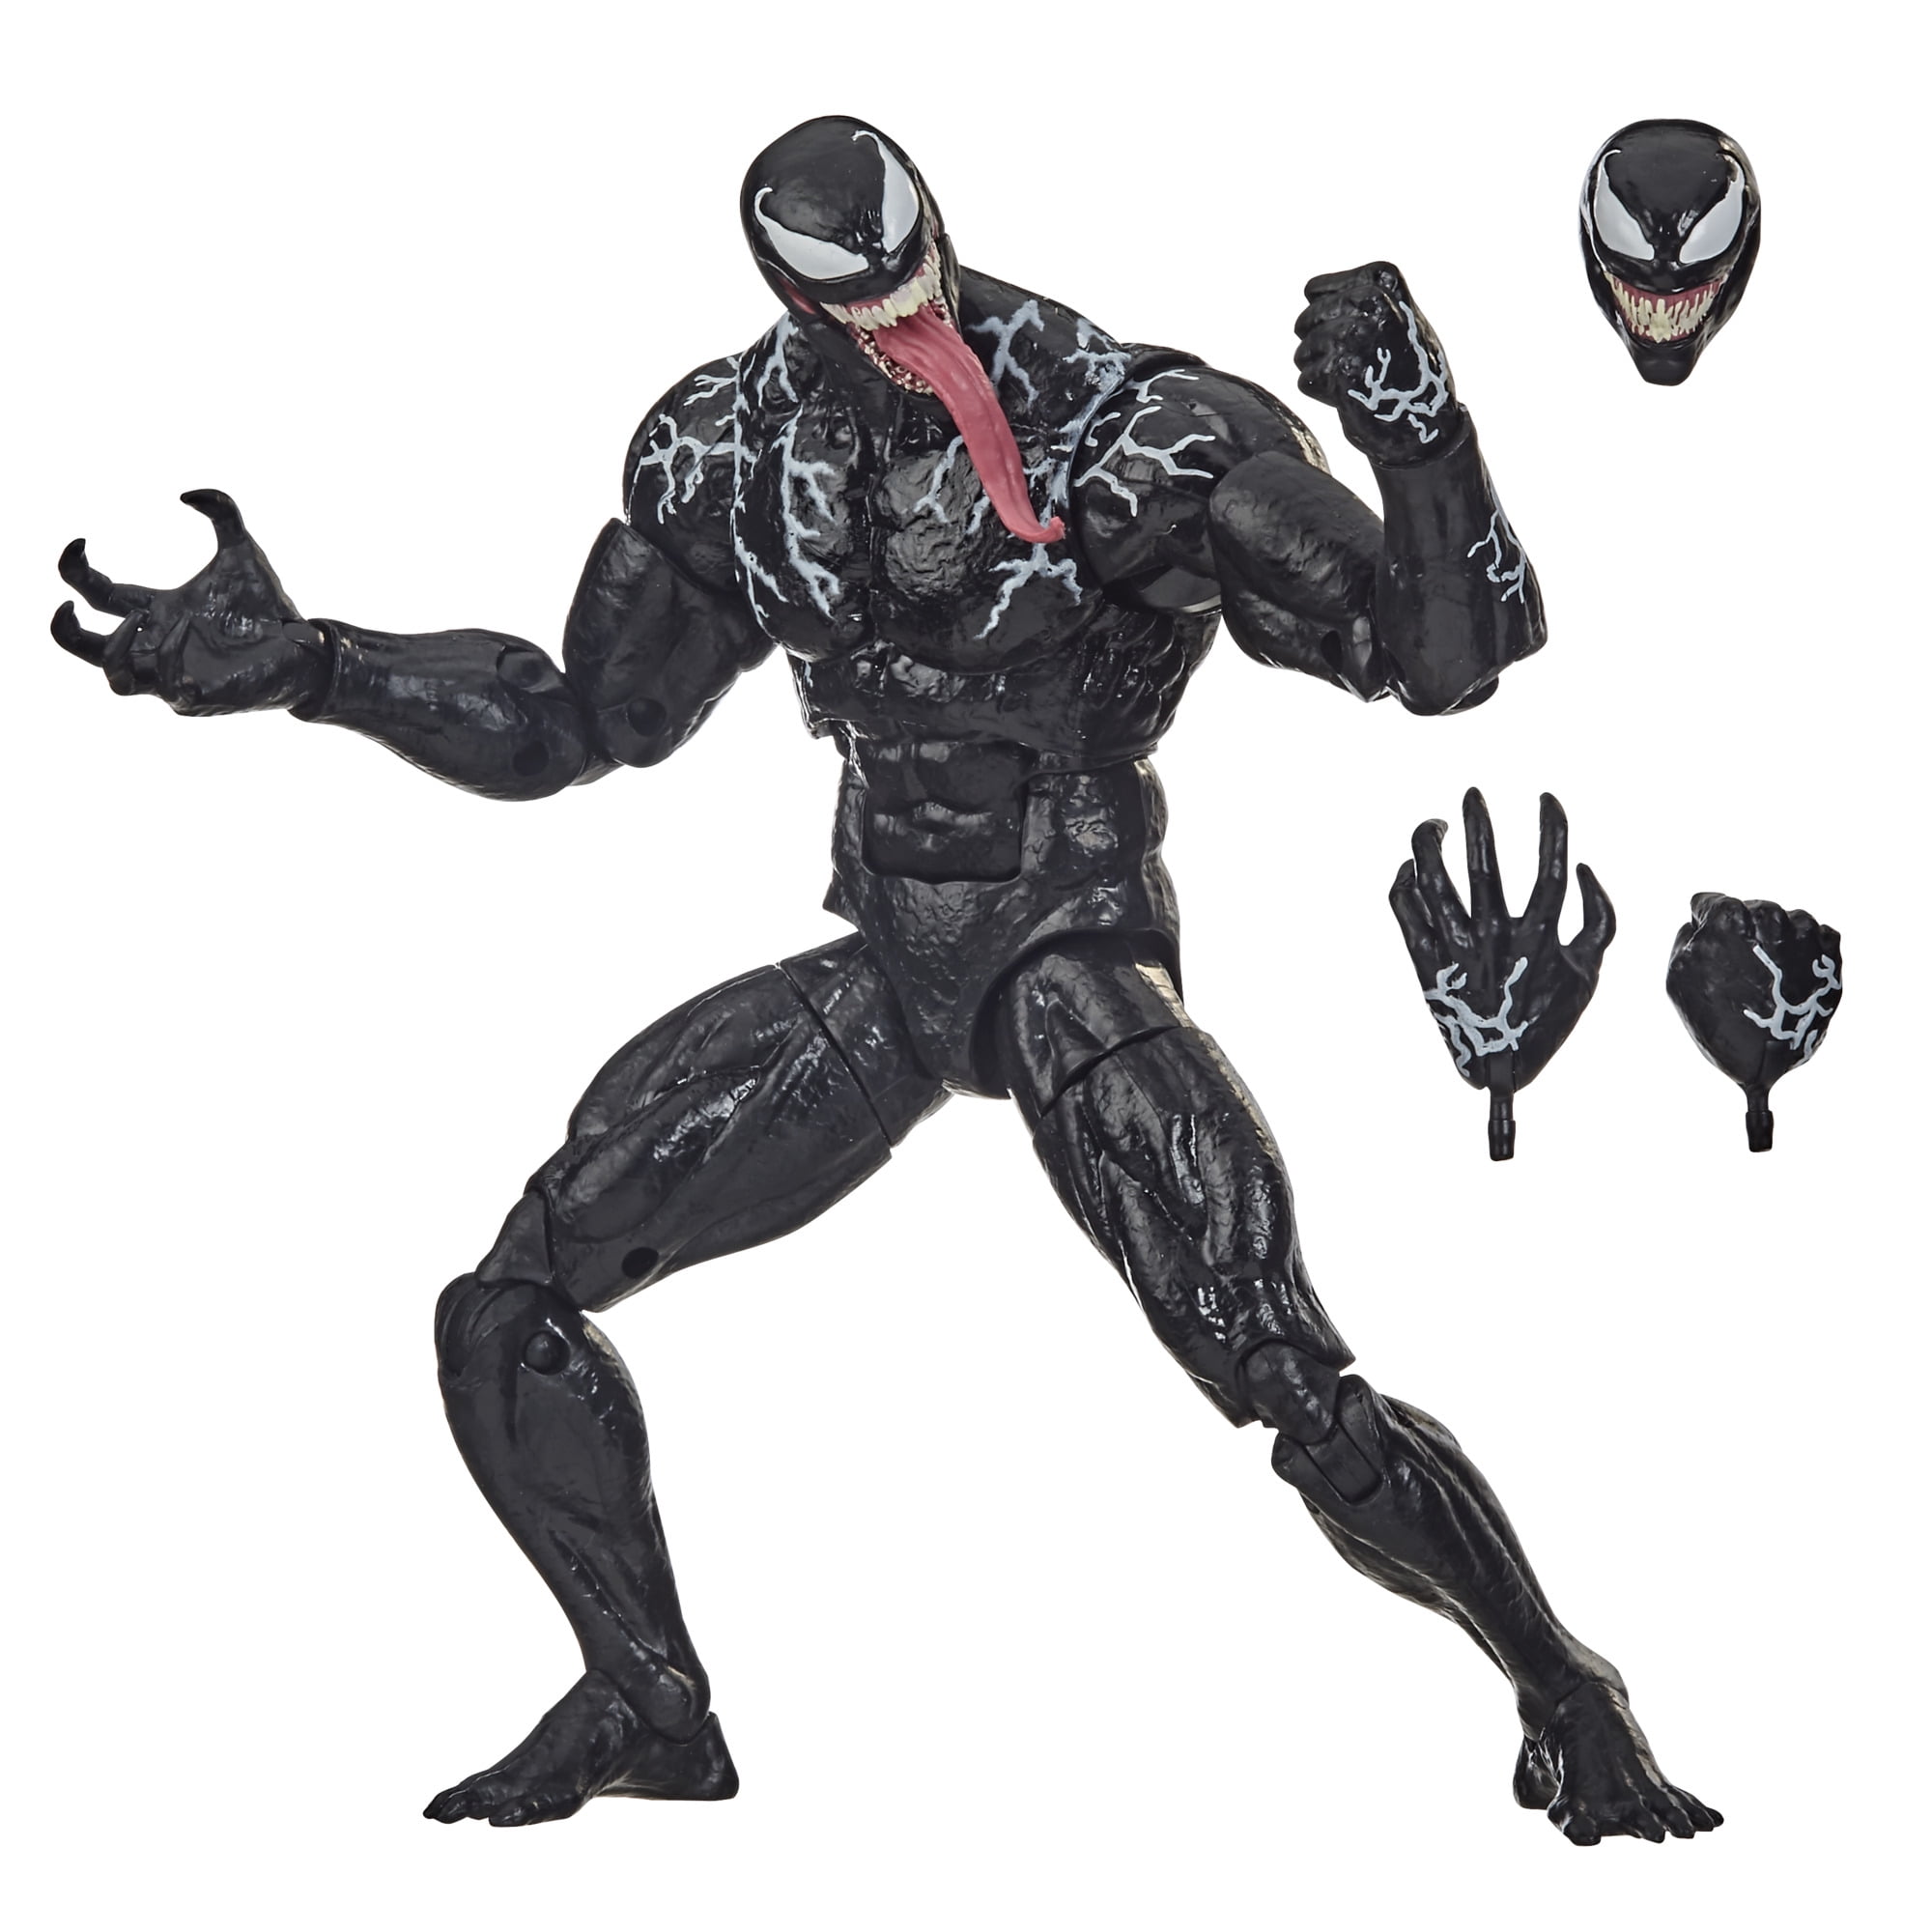 Hasbro Marvel Legends Series Venom Action Figure, Includes